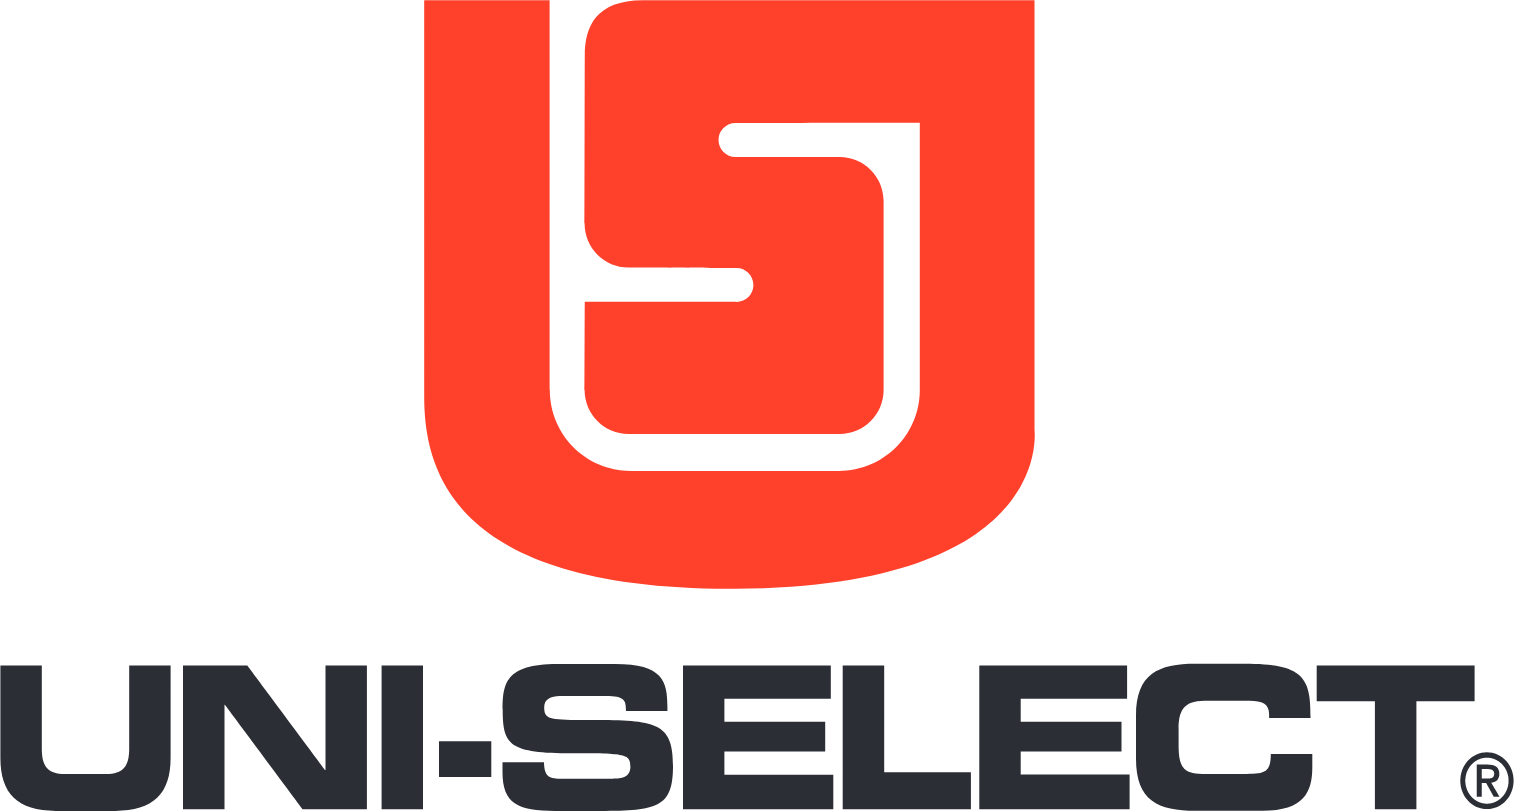 Uni-Select logo large (transparent PNG)